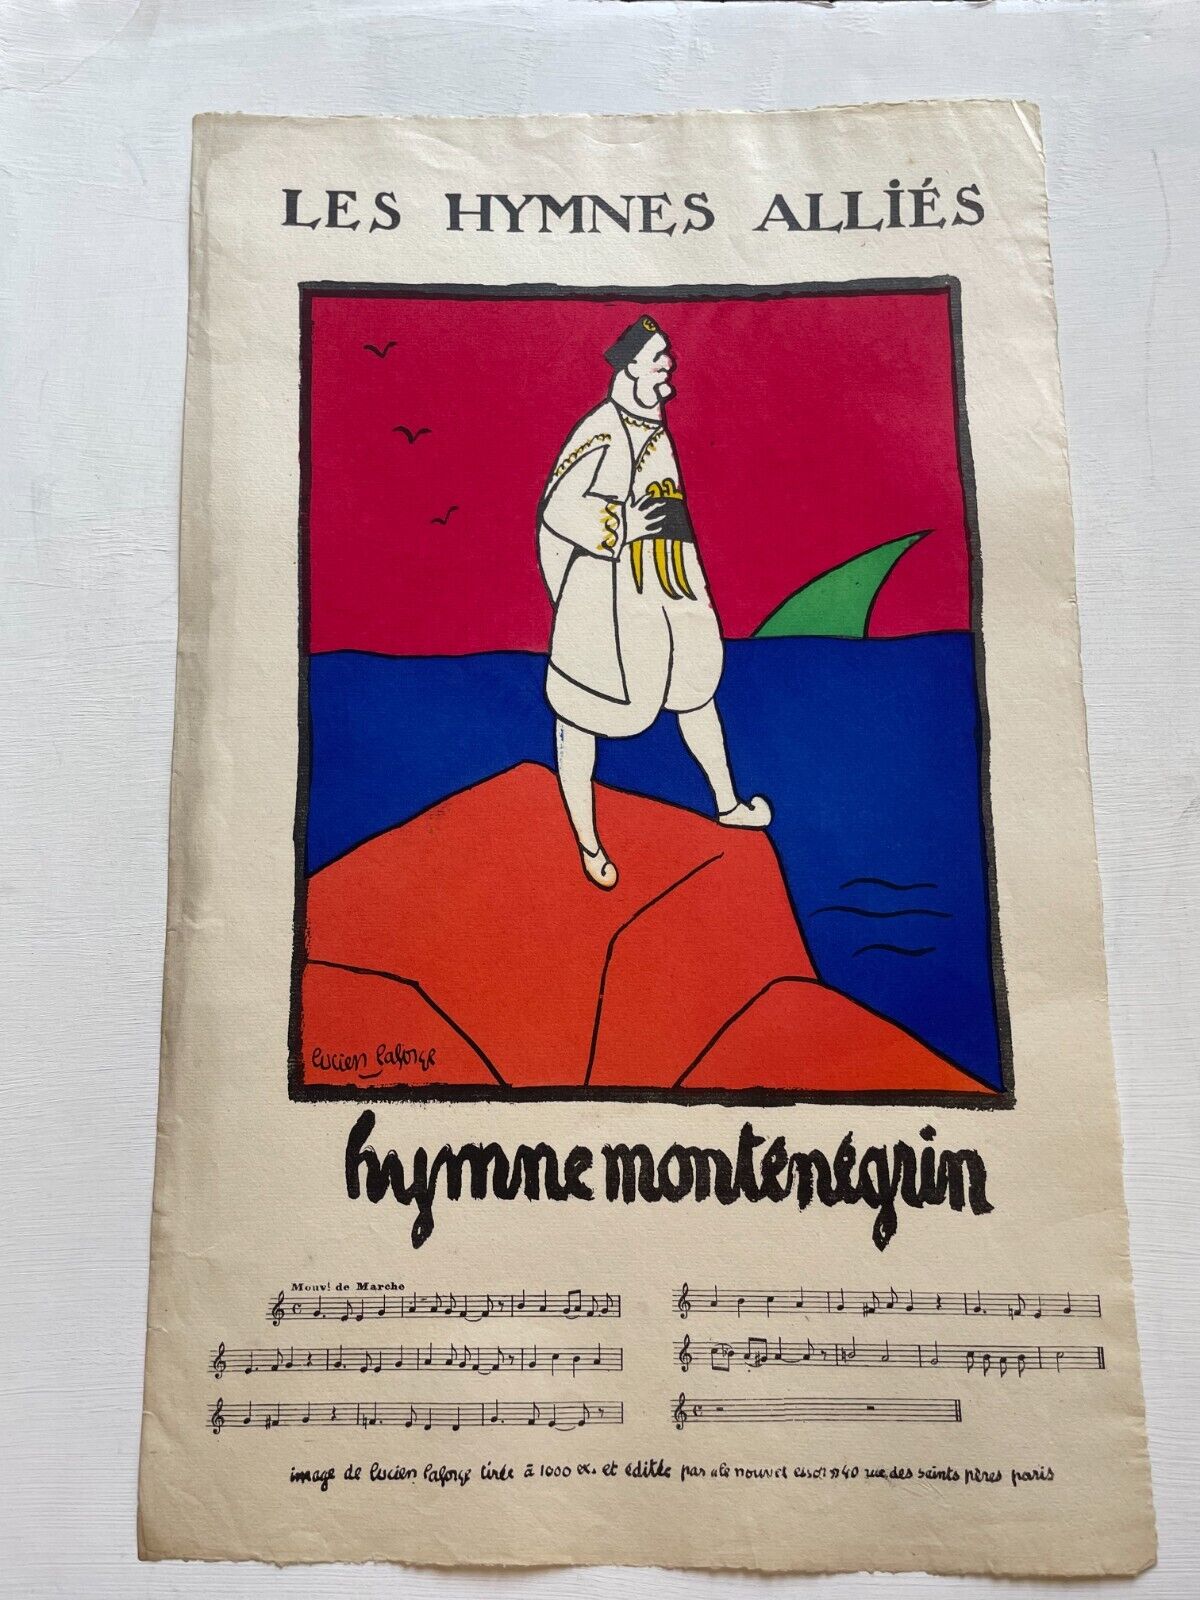 Original 1916 WWI Les Hymnes Allies Hymne Montenegrin Limited Edition of 1000